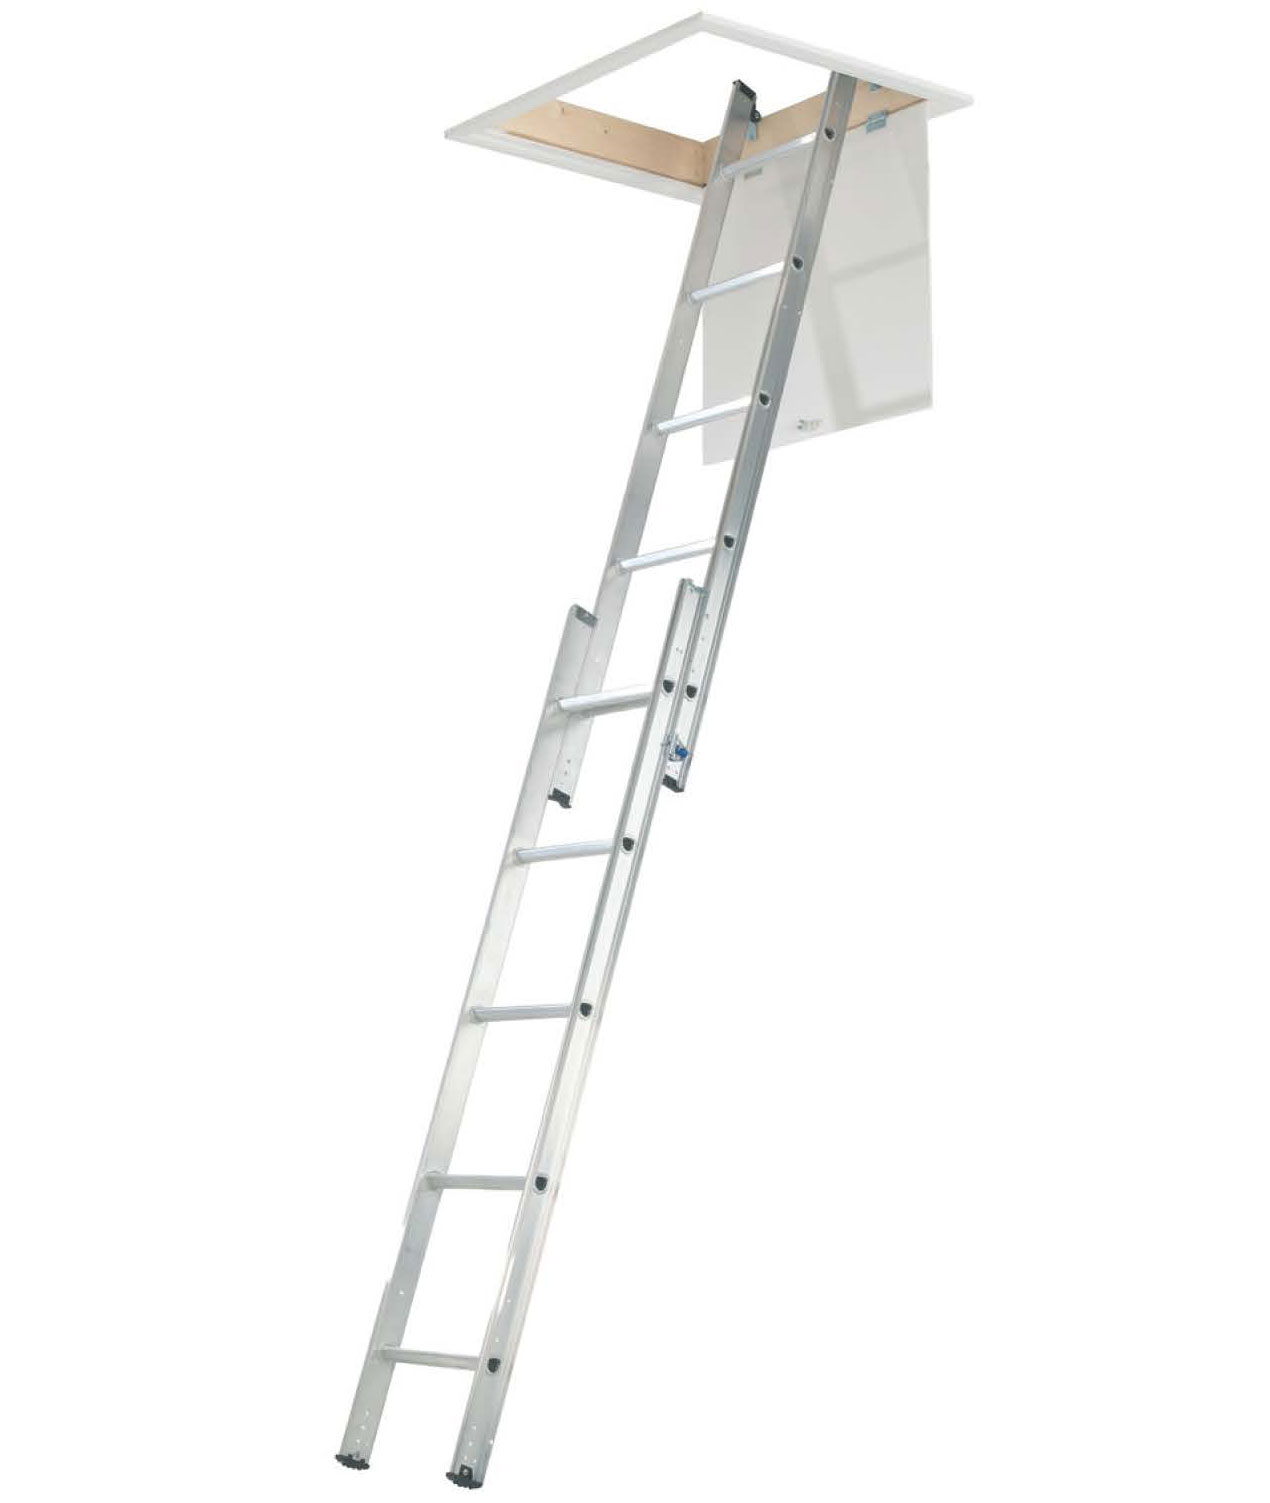 2 Section loft Ladder